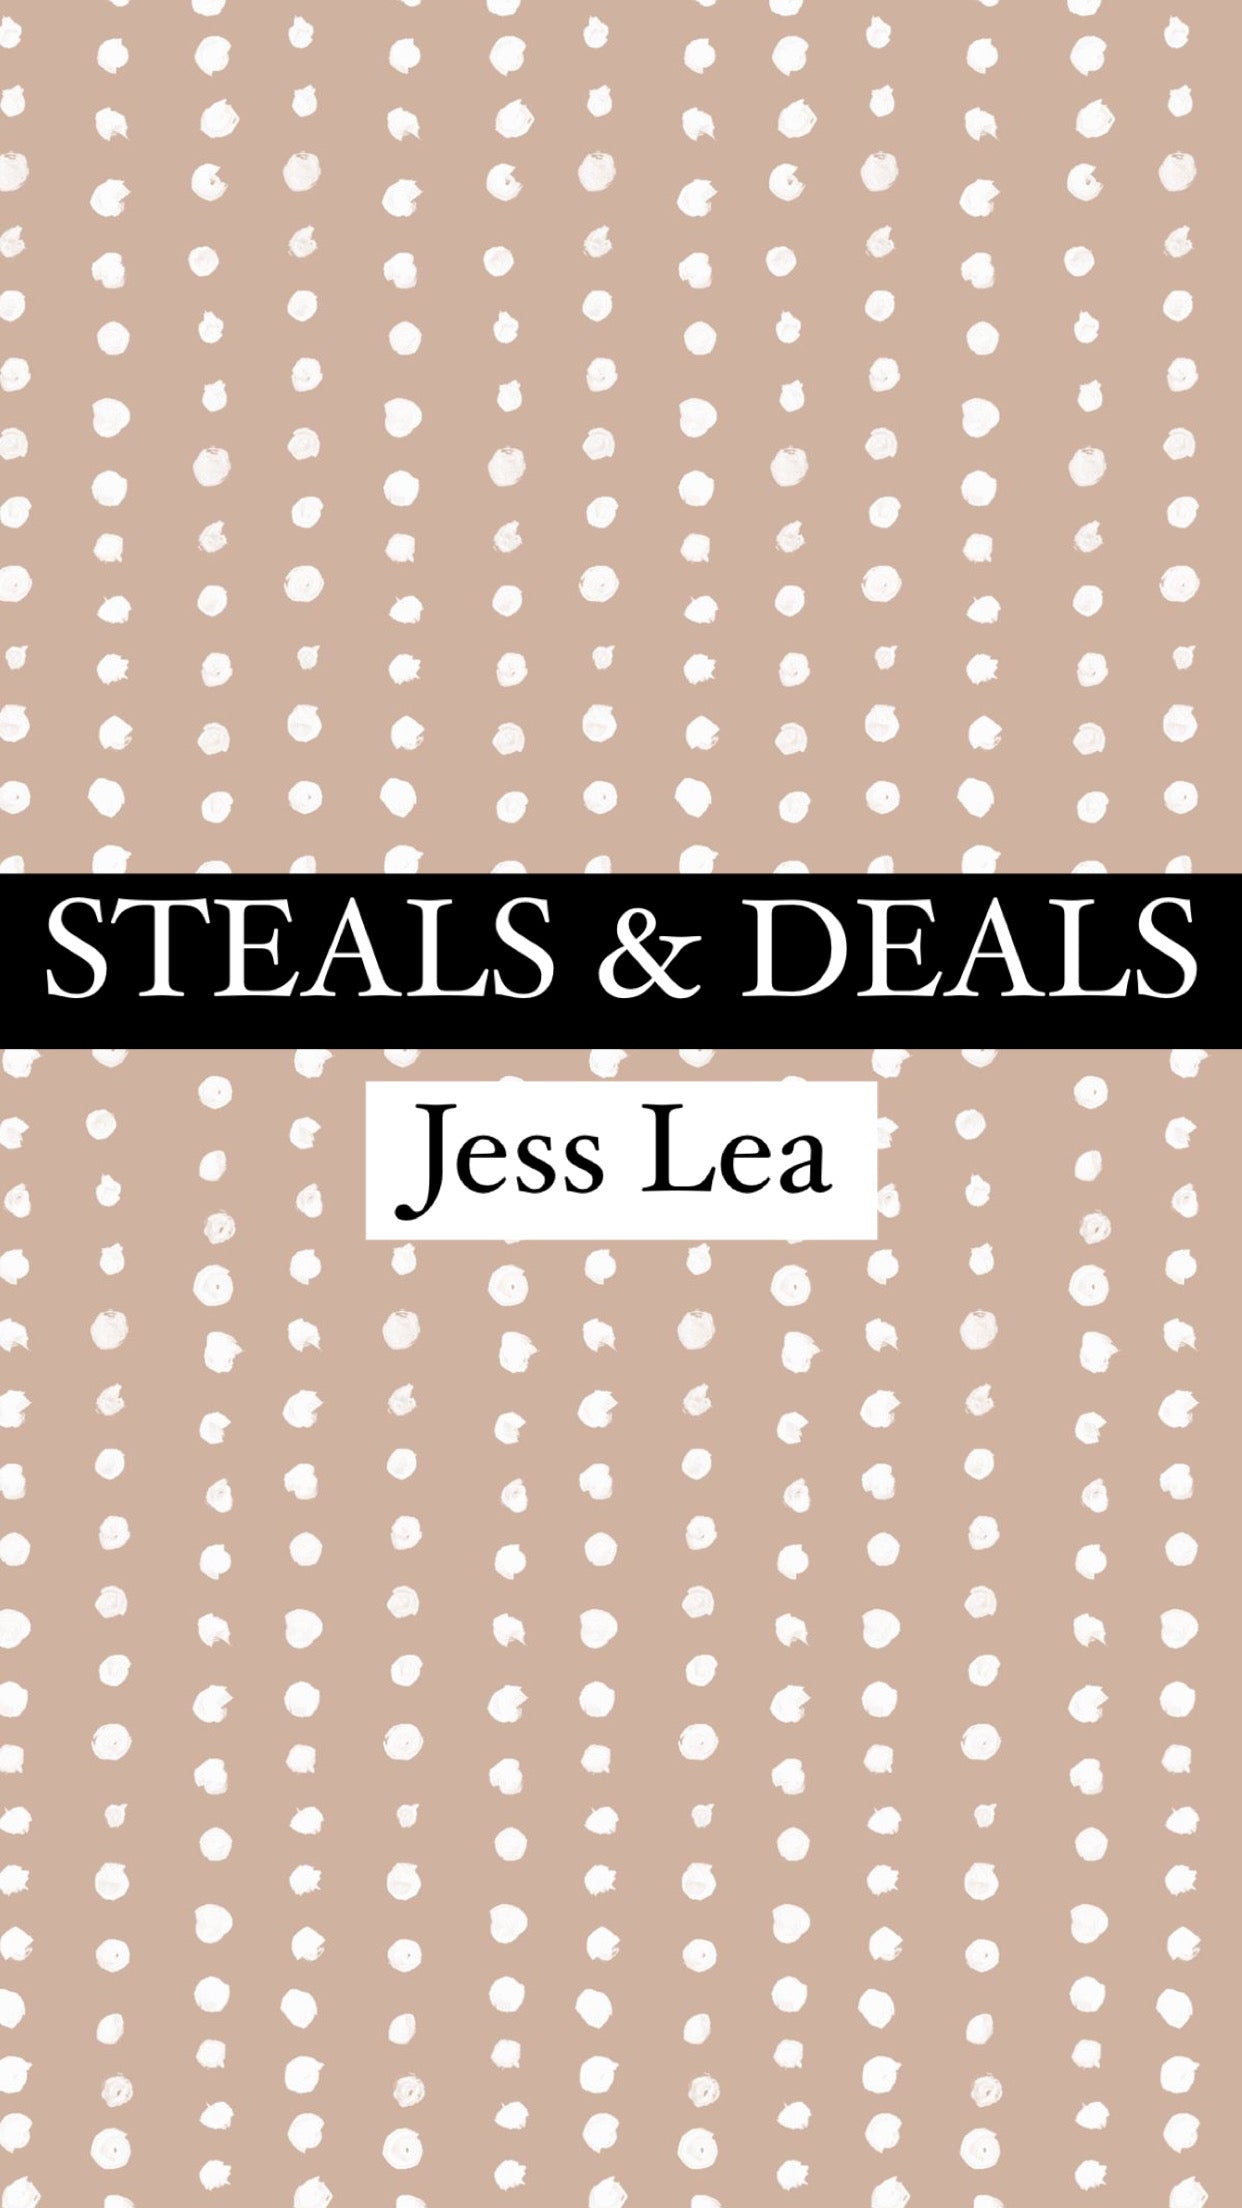 Steals and Deals Item - Jess Lea